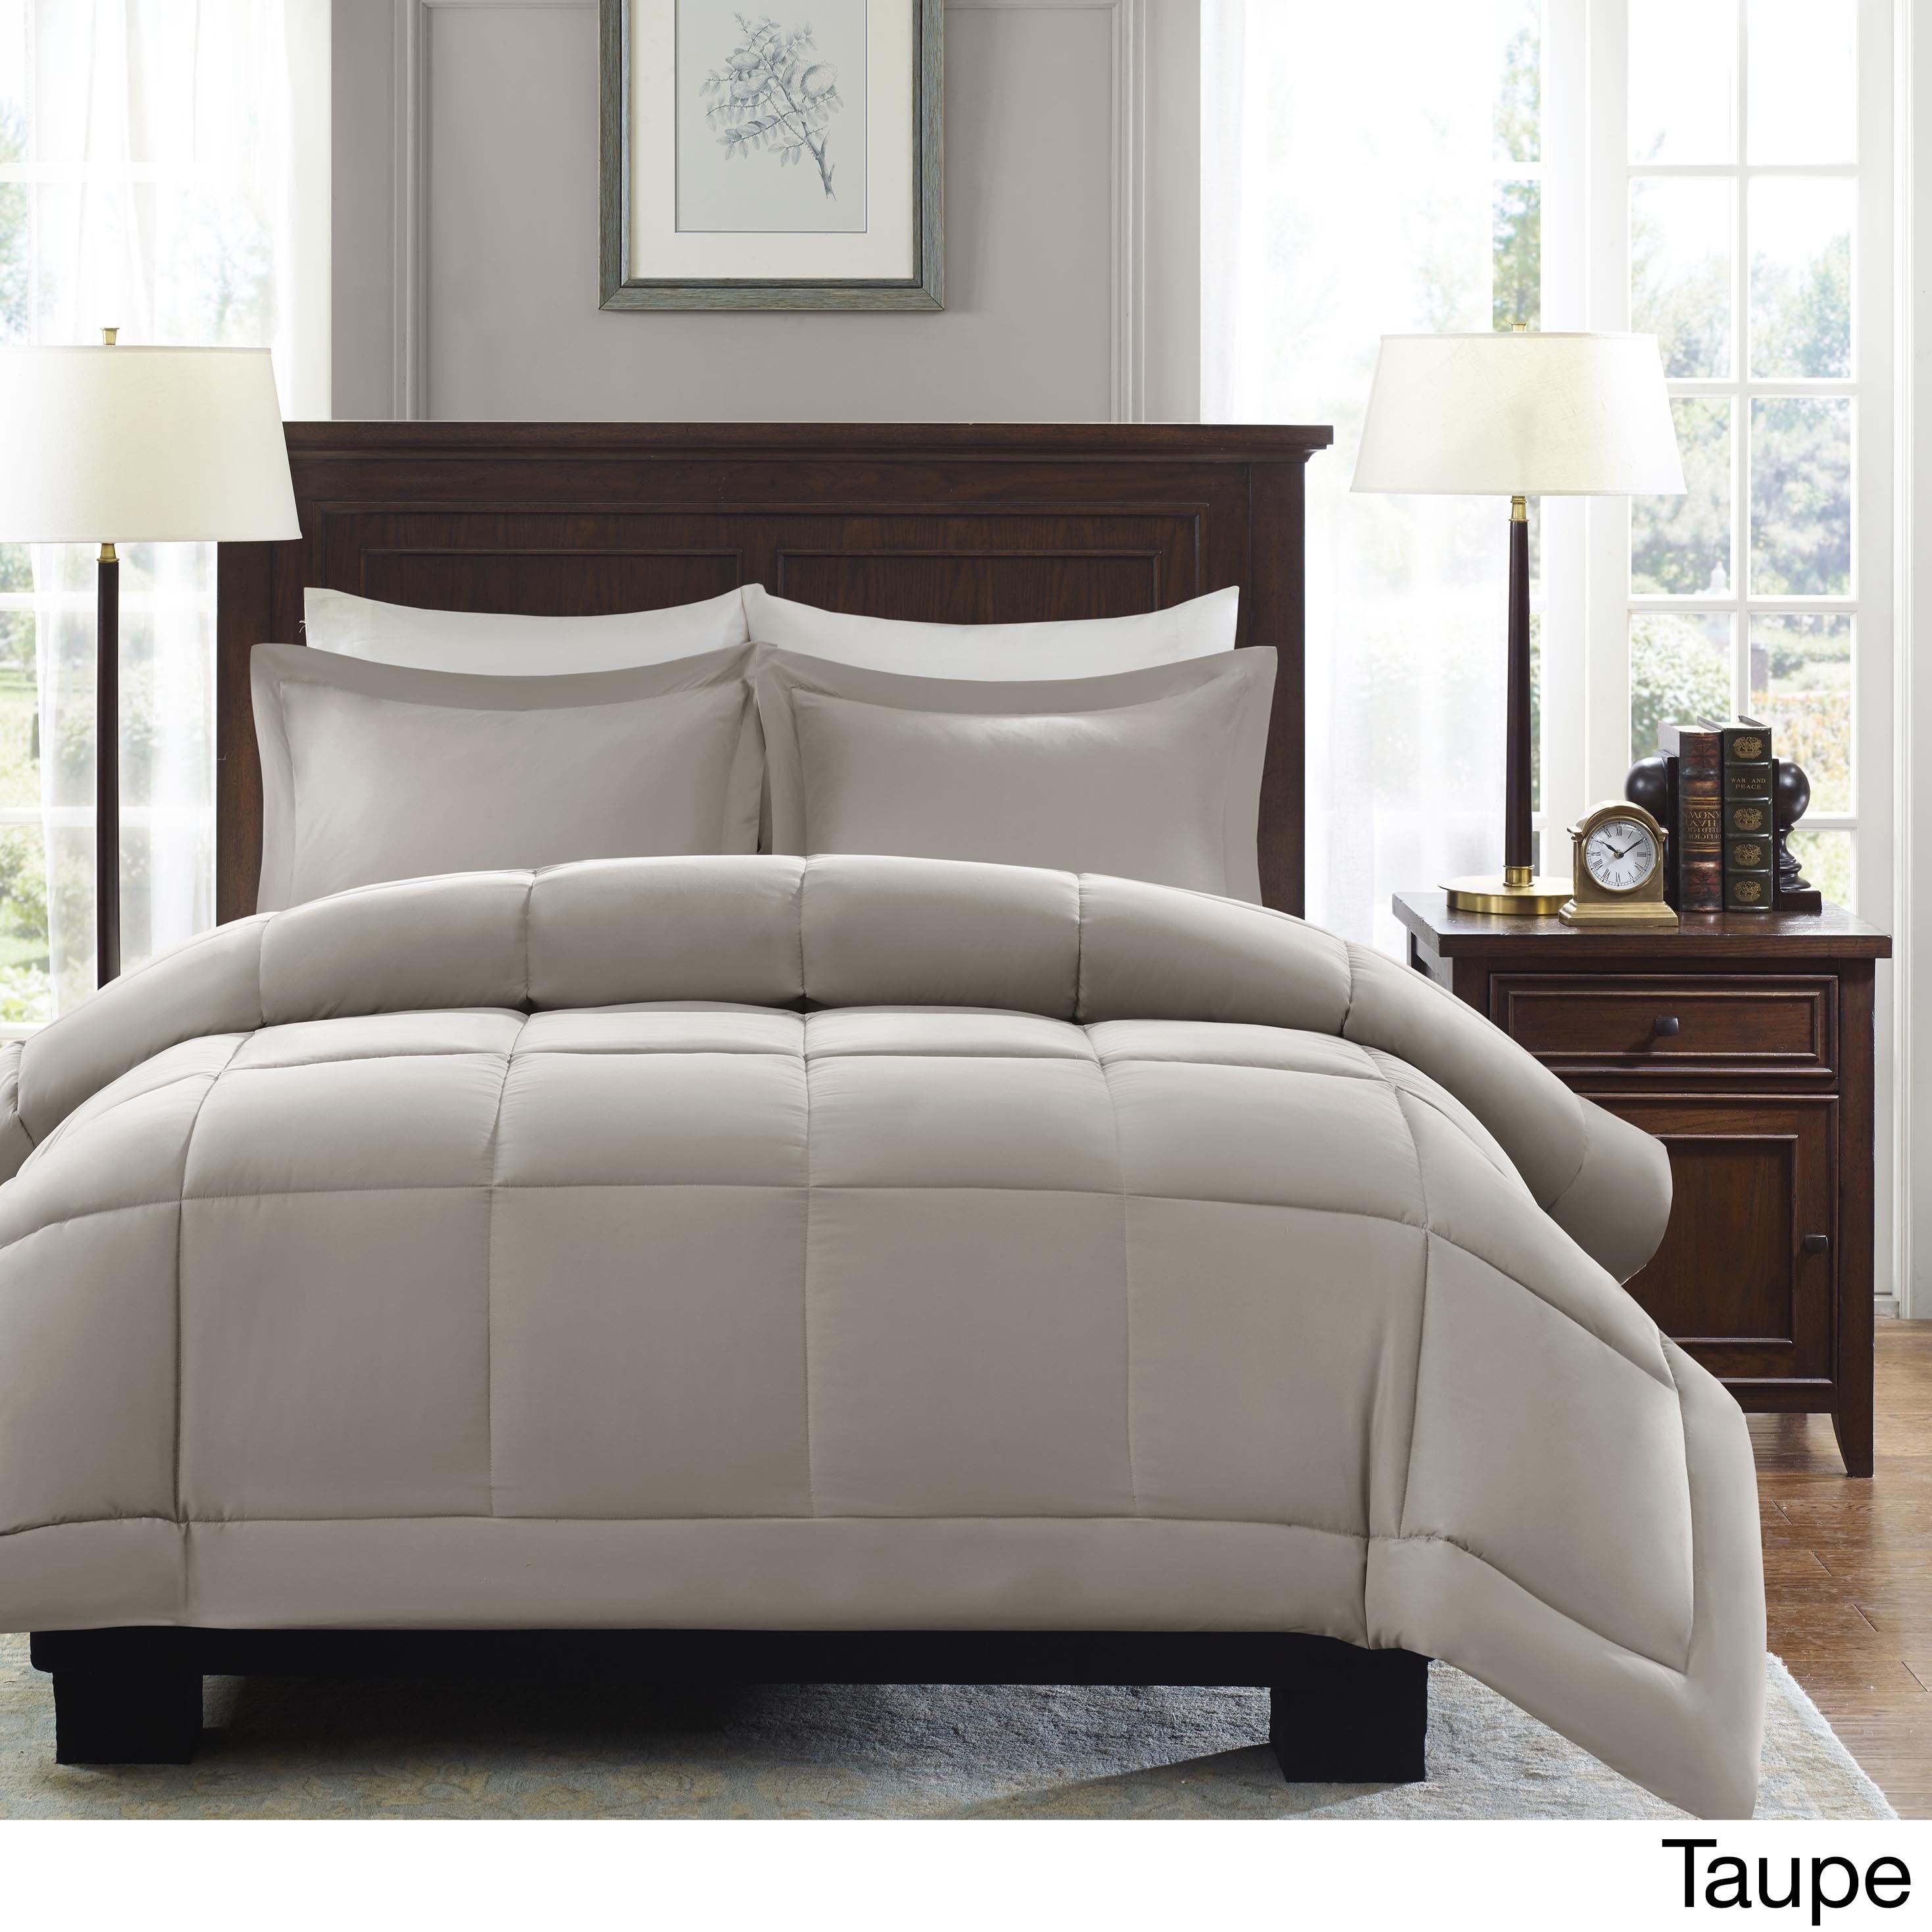 Comfort Classics Belford Microcell Down Alternative Comforter Set, Grey, King/Cal King - image 5 of 5